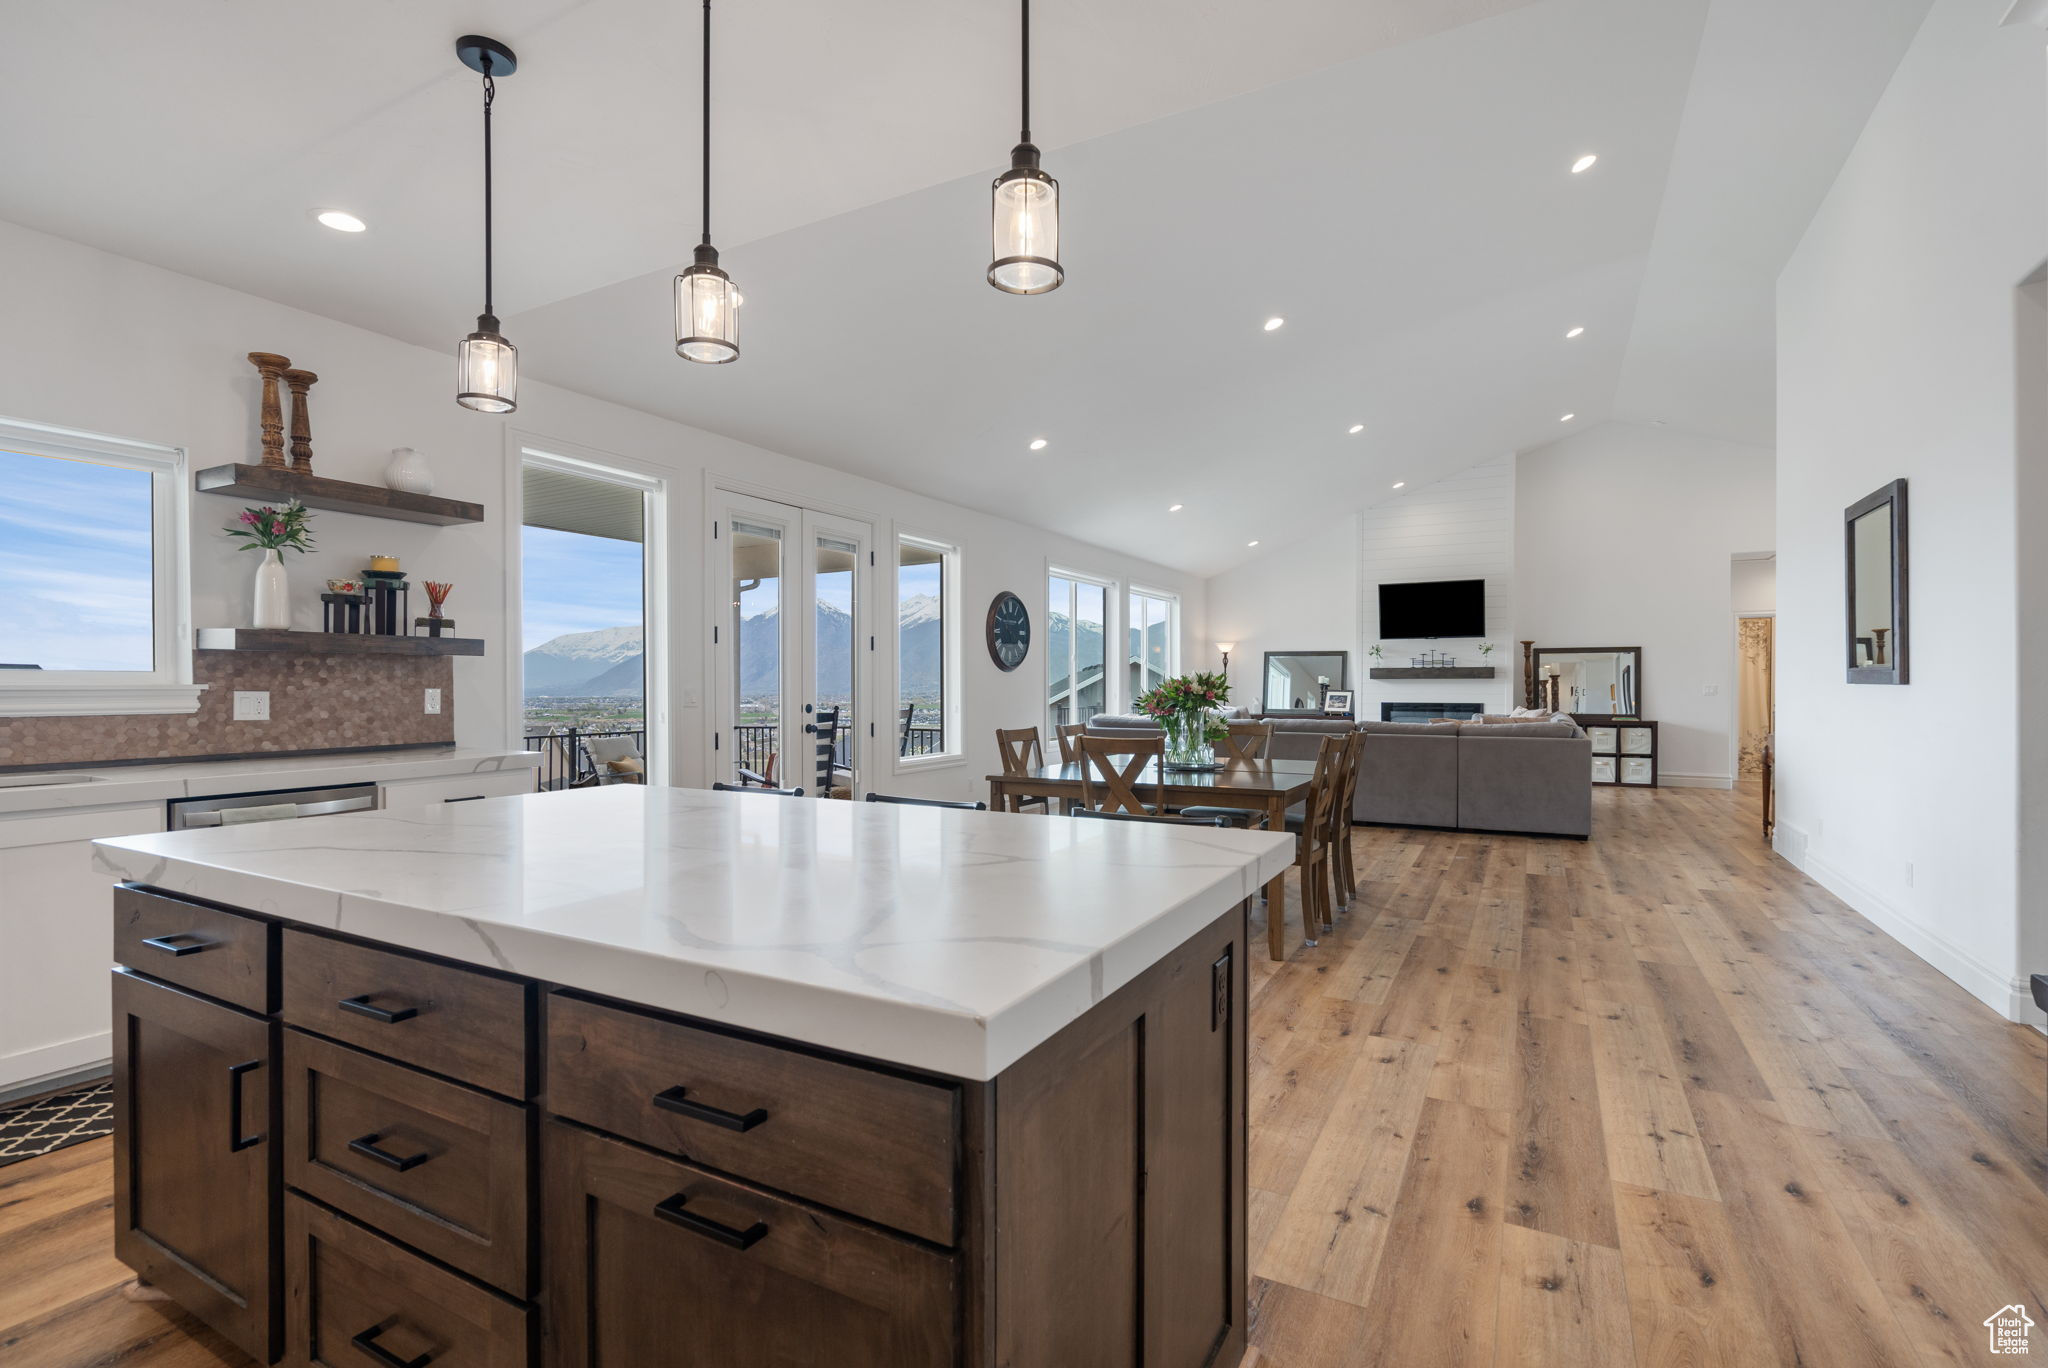 Kitchen featuring backsplash, a healthy amount of sunlight, light hardwood / wood-style floors, and hanging light fixtures